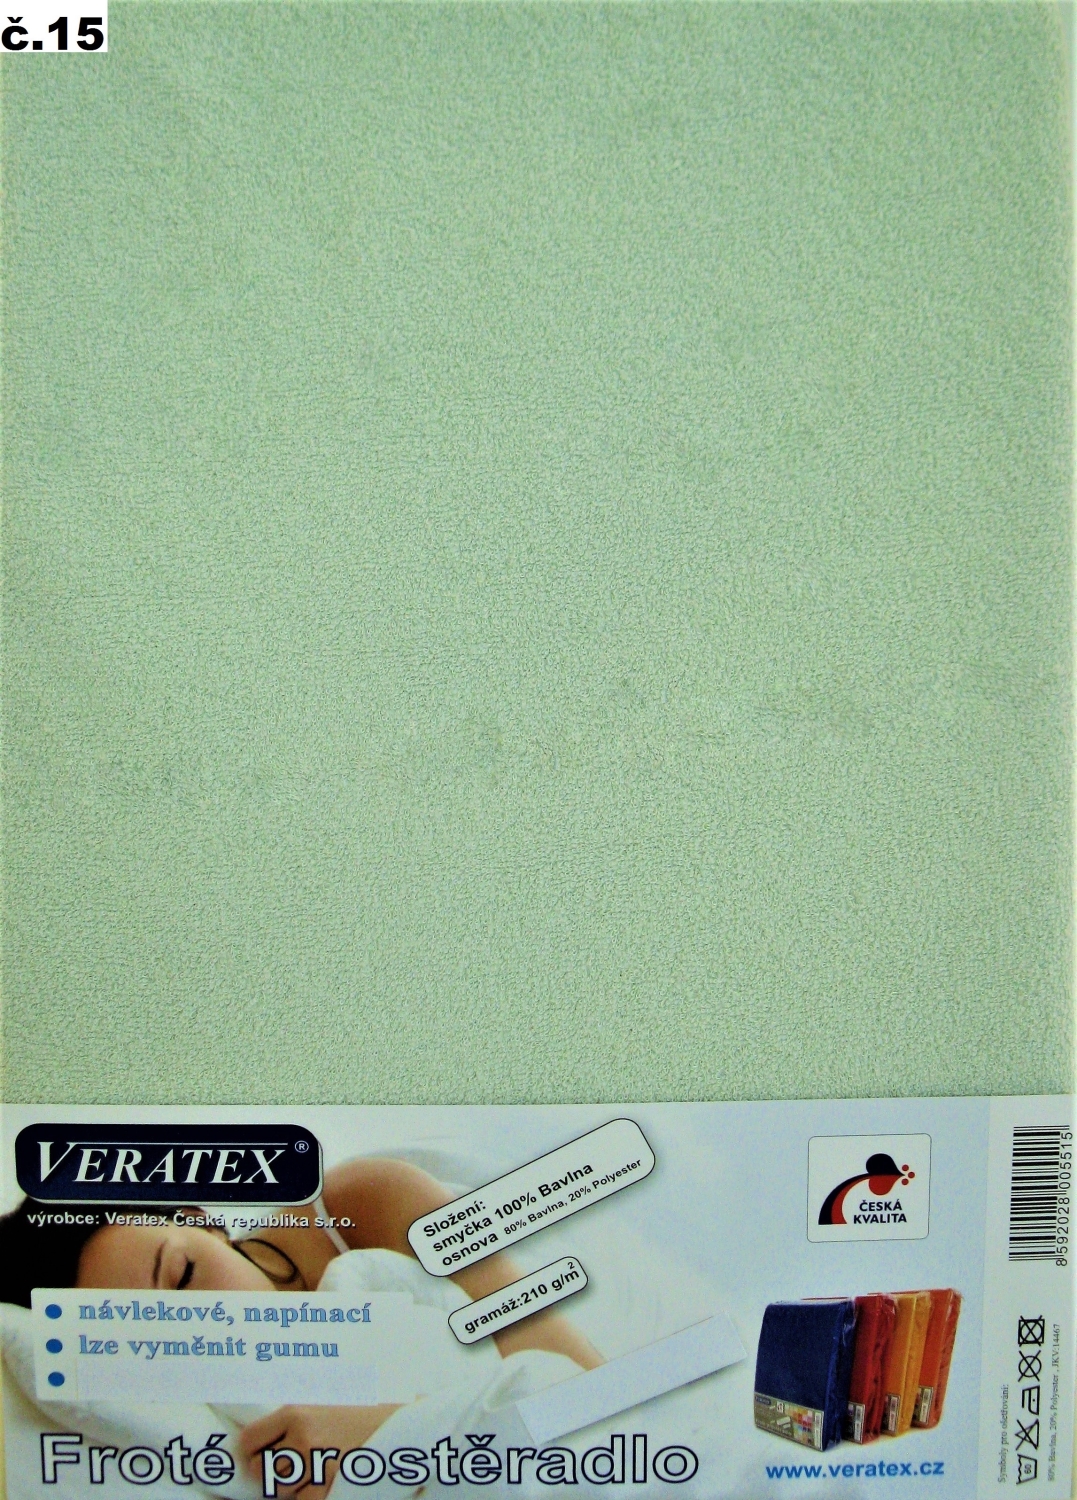 Veratex Froté prostěradlo 90x220/16 cm (č.15 sv.zelená) 90 x 220 cm